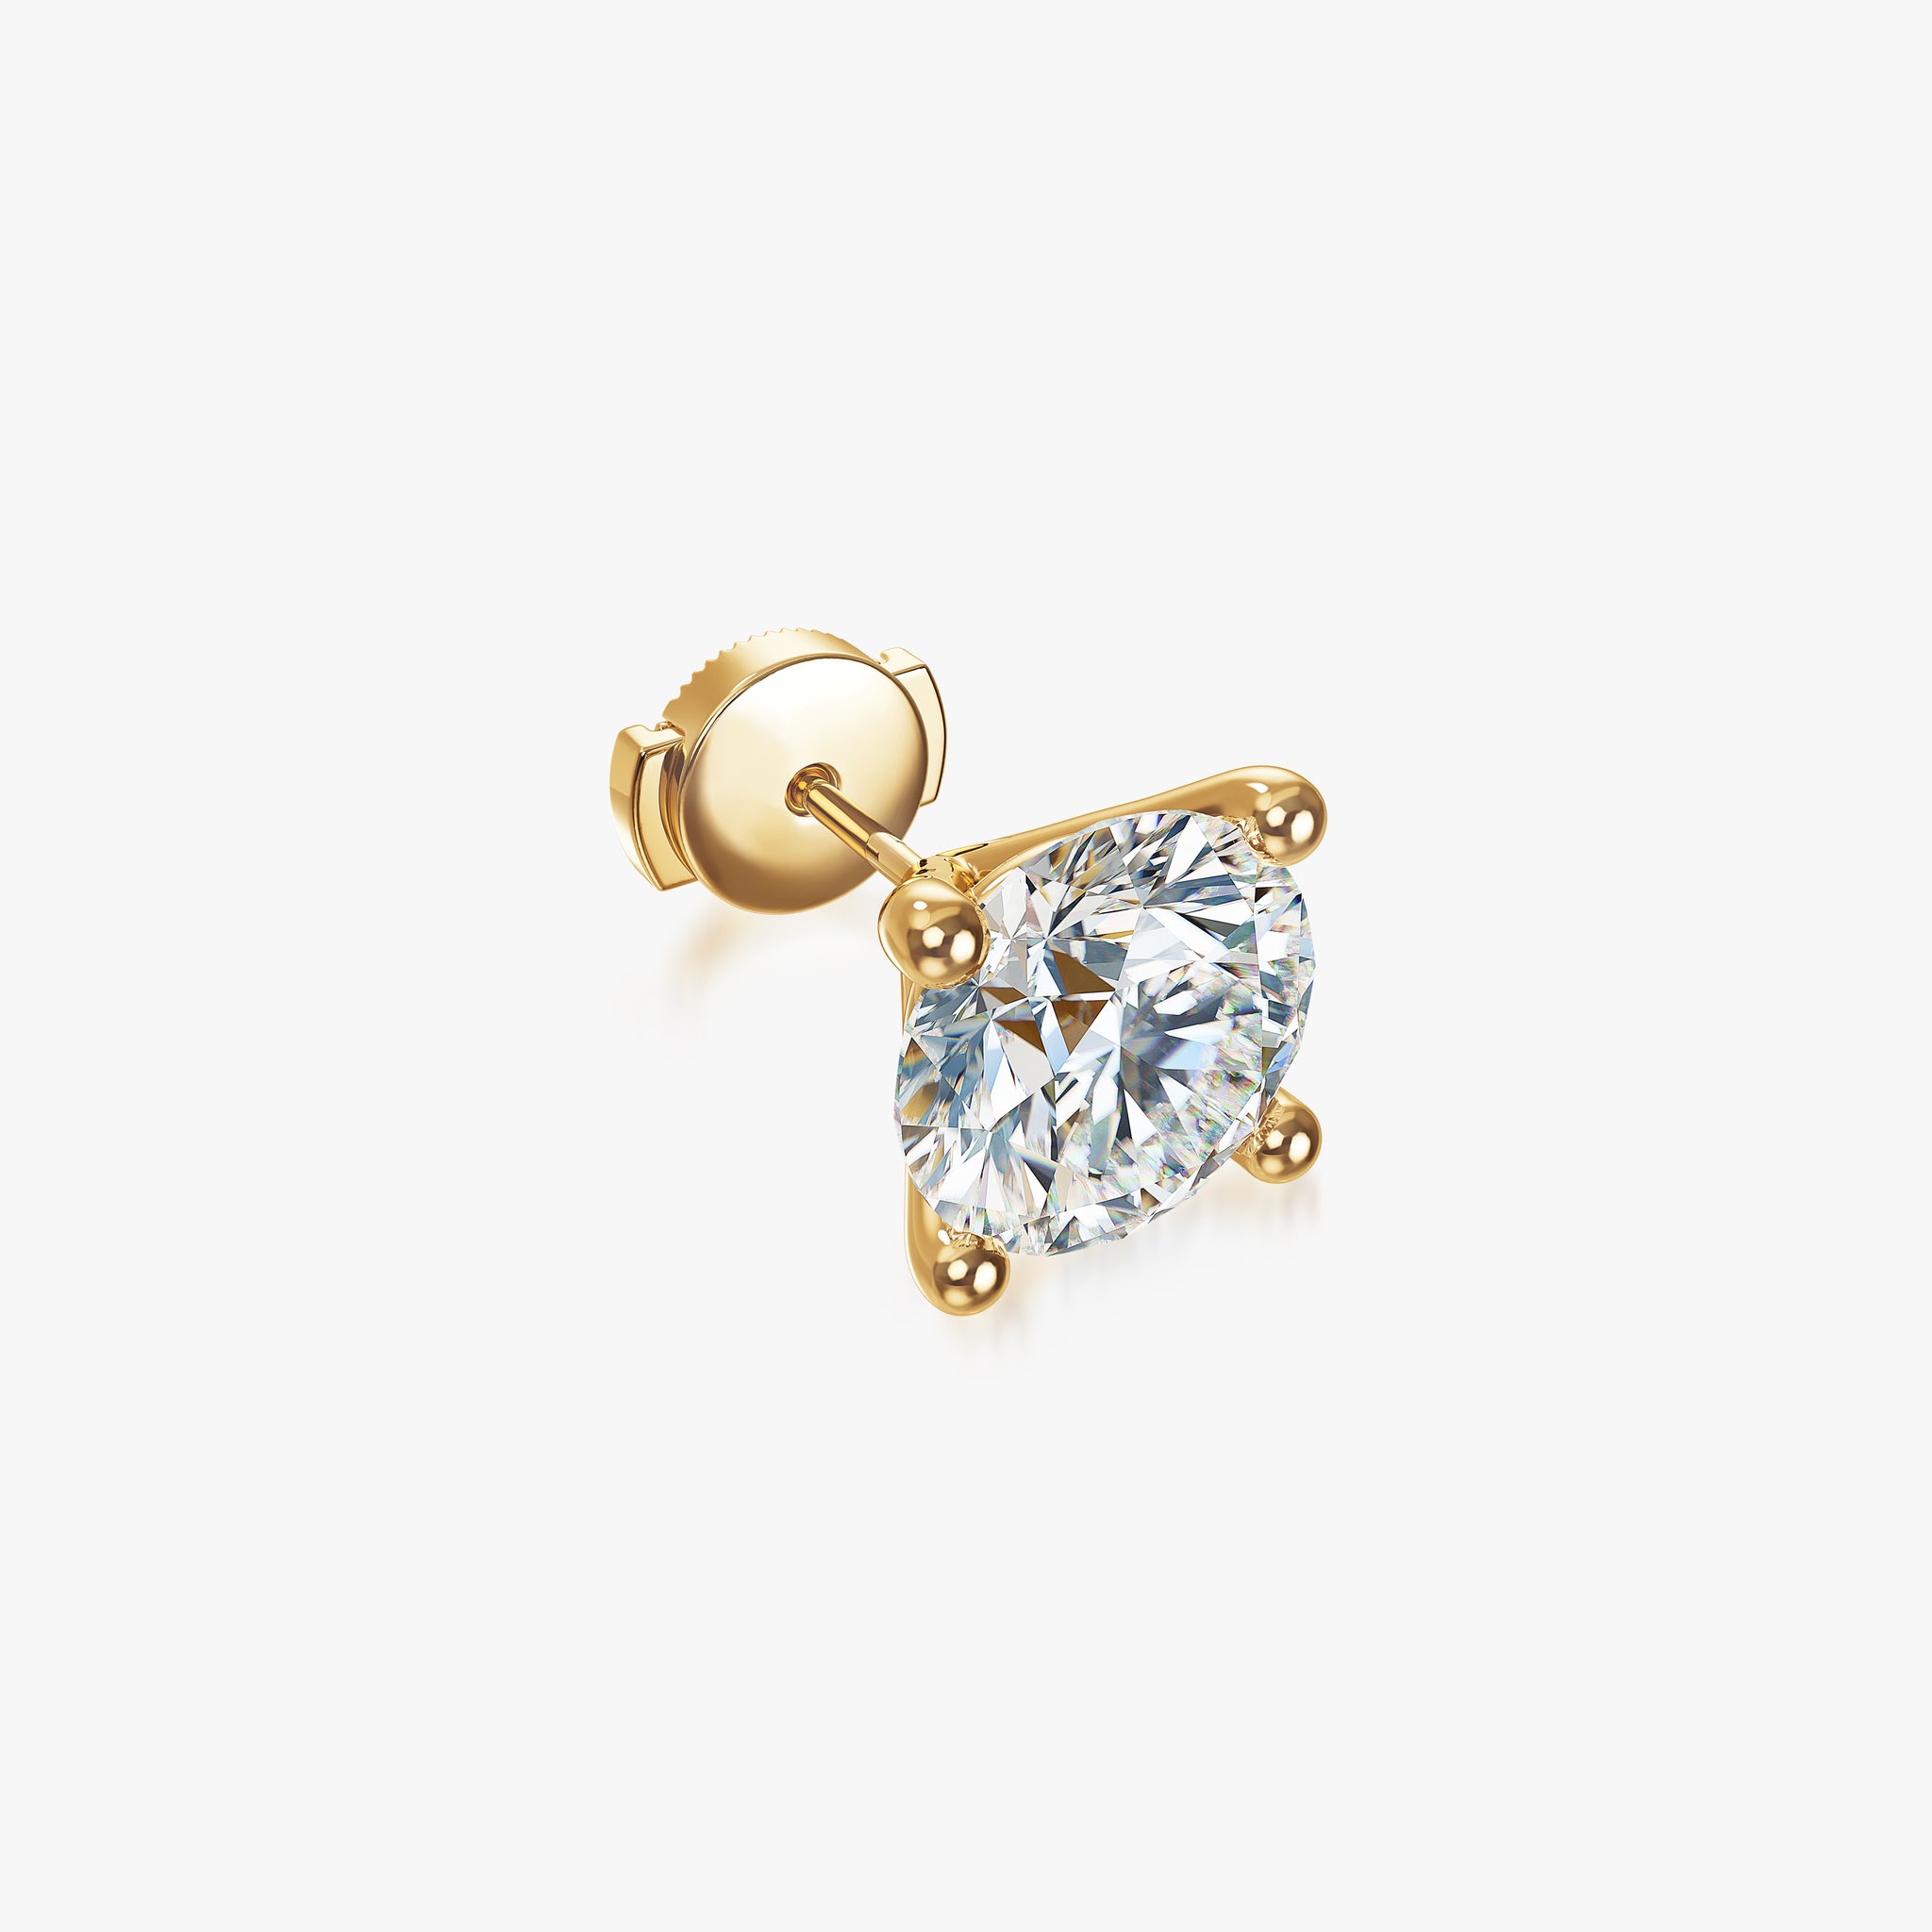 J'EVAR 18KT Yellow Gold ALTR Lab Grown Diamond Stud Earrings with Guardian Backs Lock View